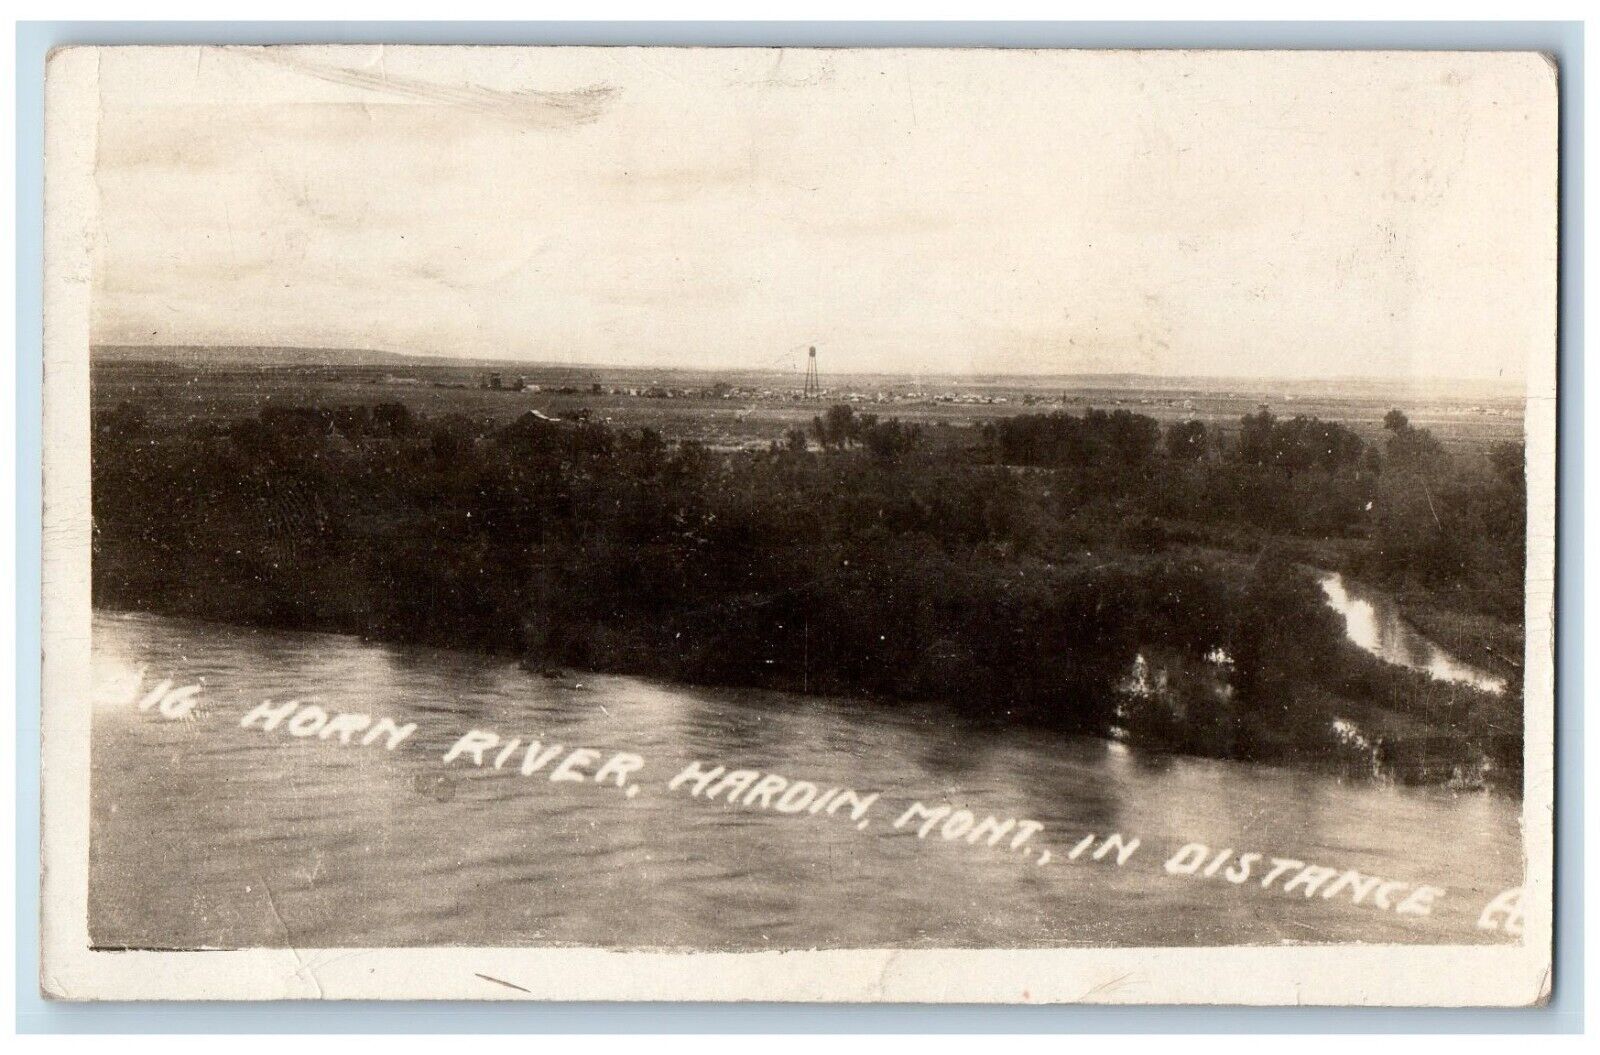 Hardin Montana MT Postcard RPPC Photo View Of Big Horn River c1910's Antique